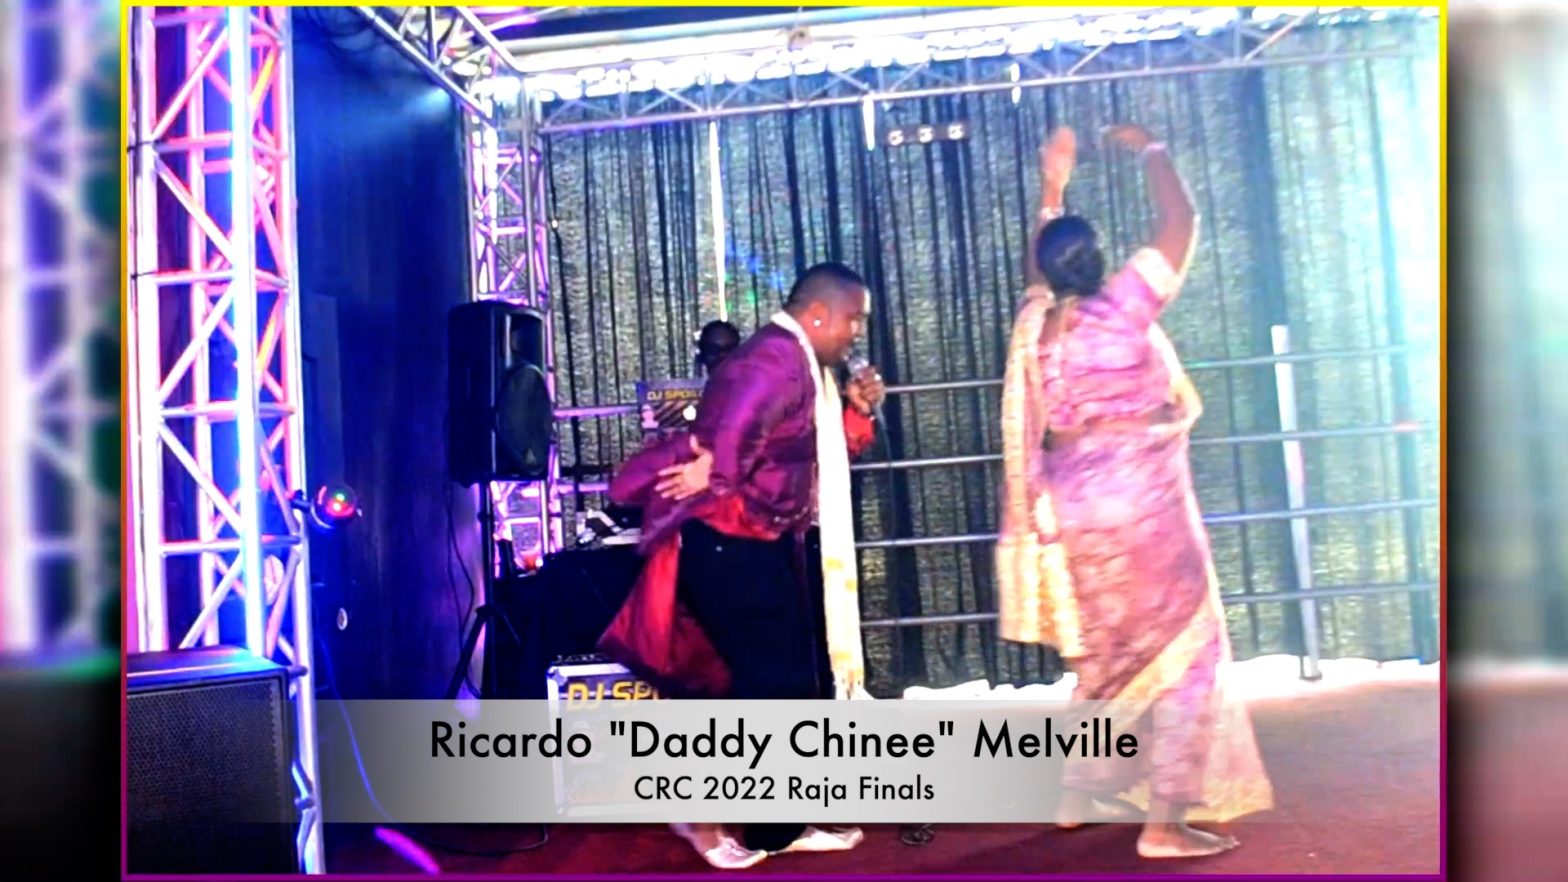 Daddy Chinee wins the Chutneymusic.com CRC 2022 Raja Title